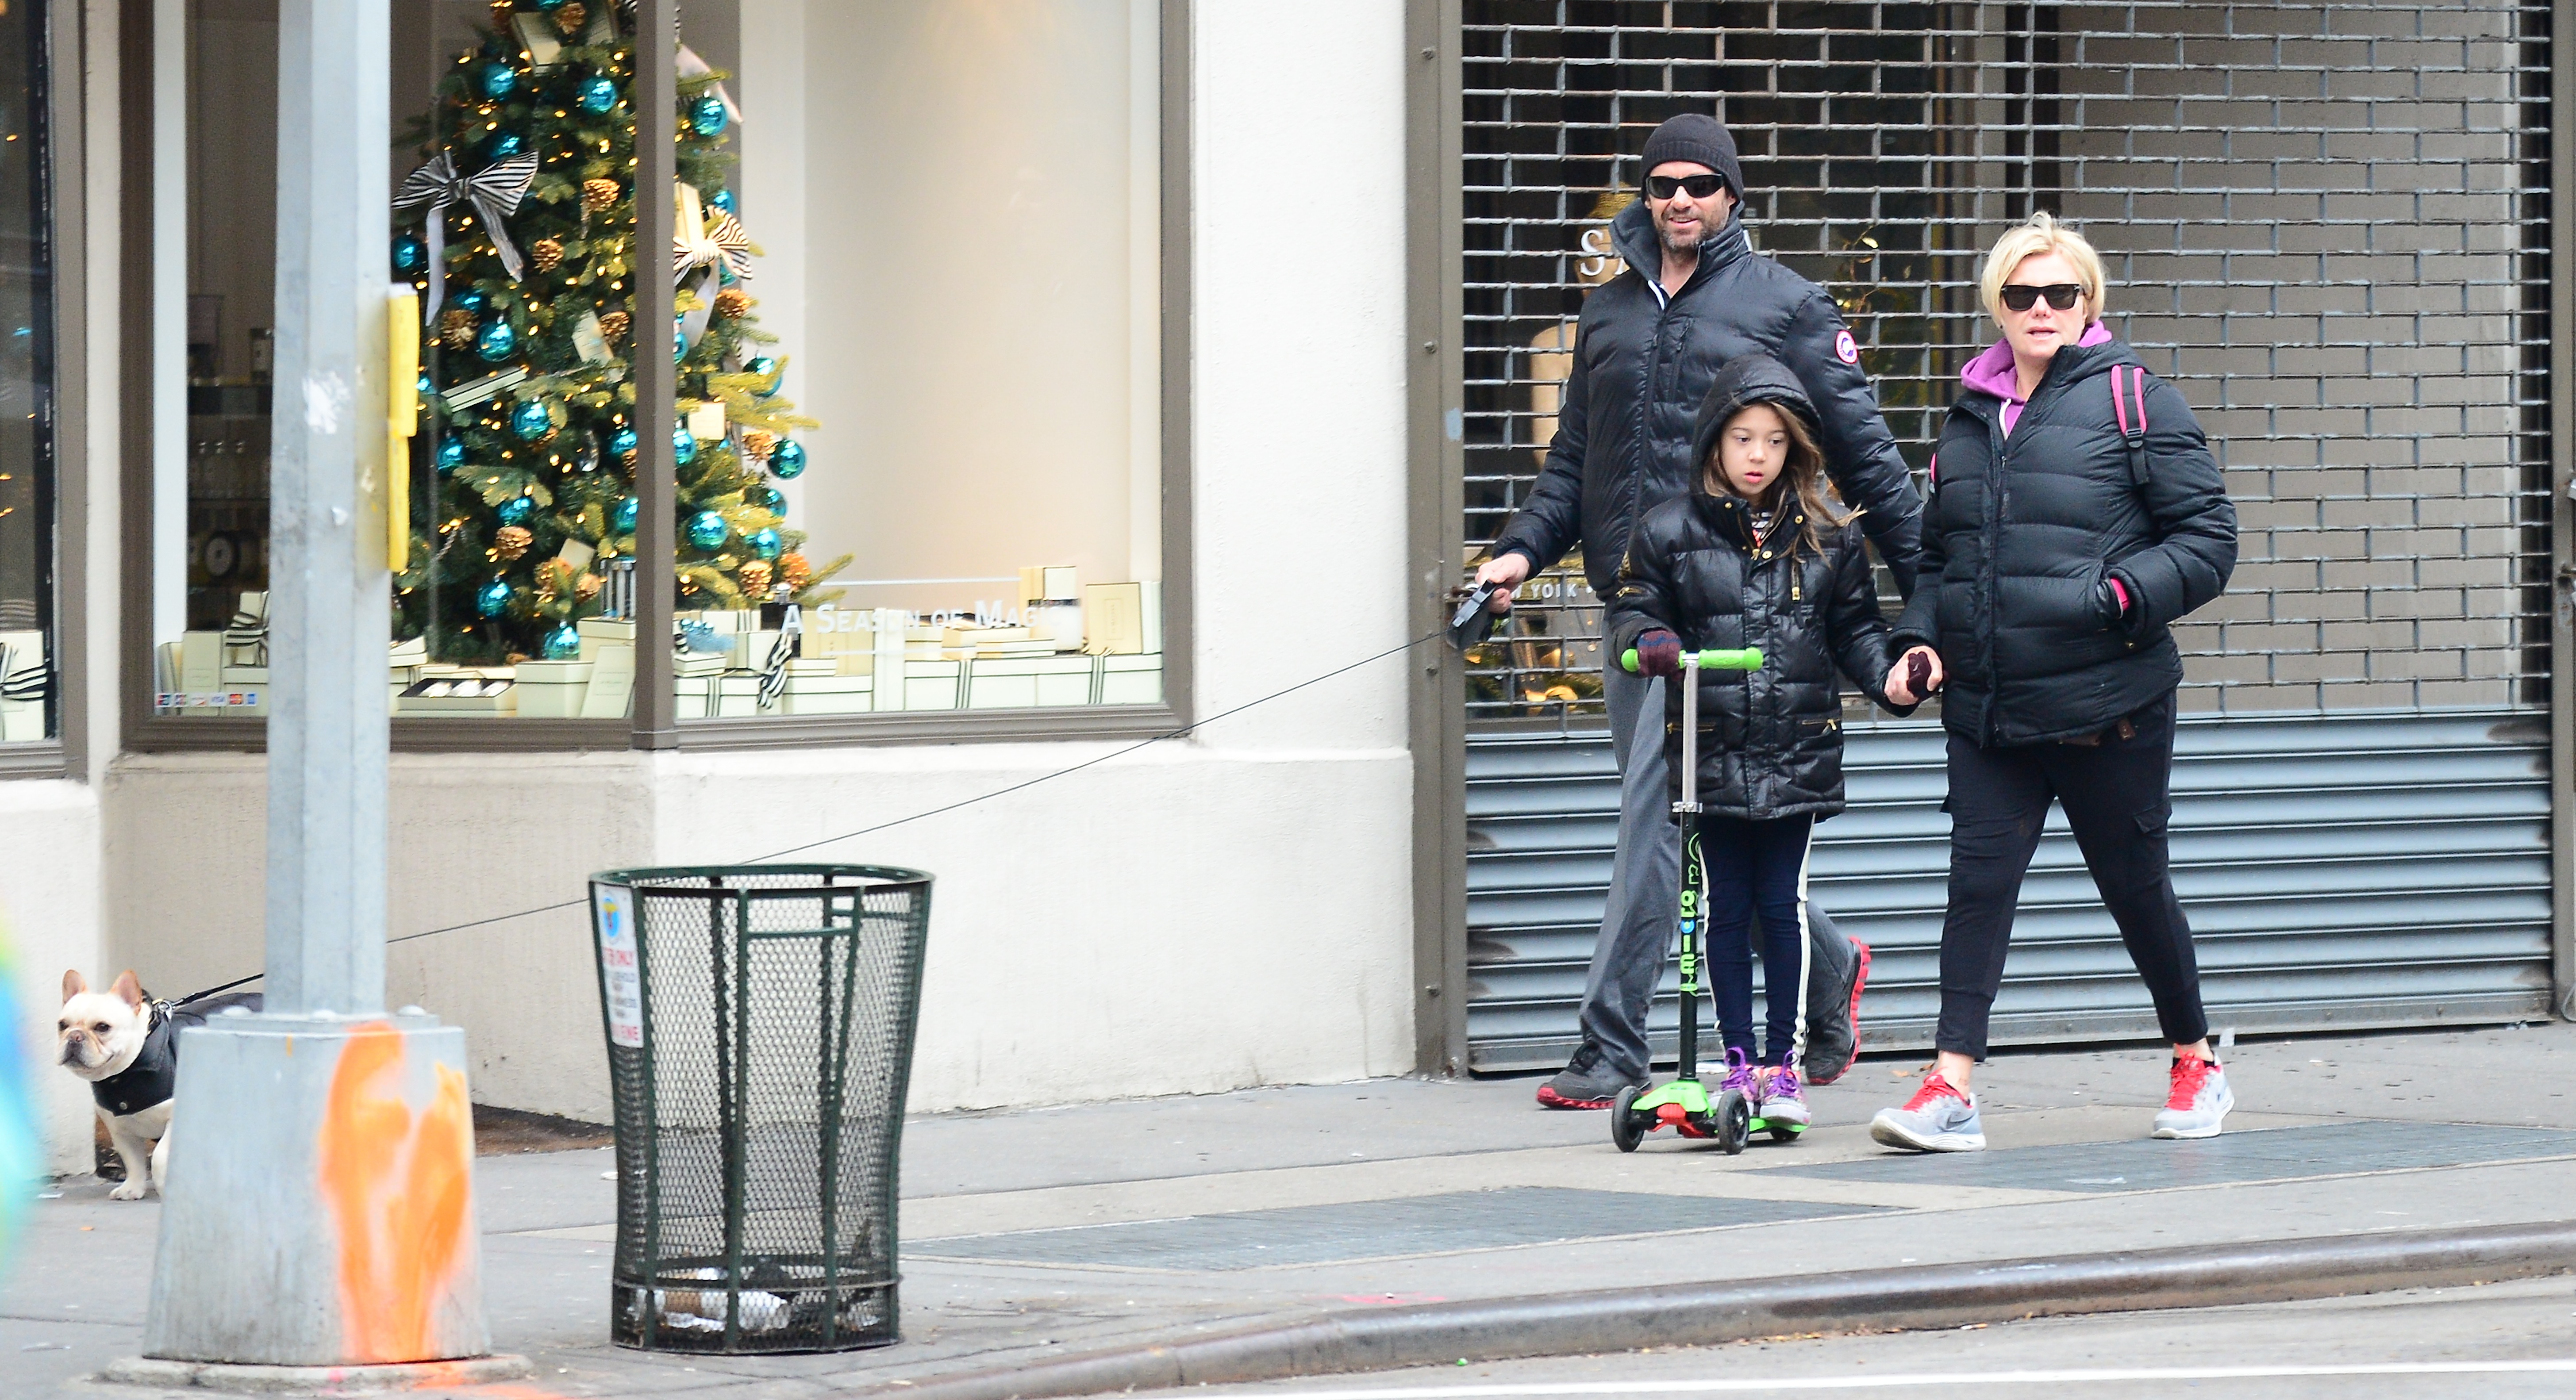 Hugh Jackman, Ava Jackman, and Deborra-Lee Furness in West Village in New York City on December 2, 2013 | Source: Getty Images